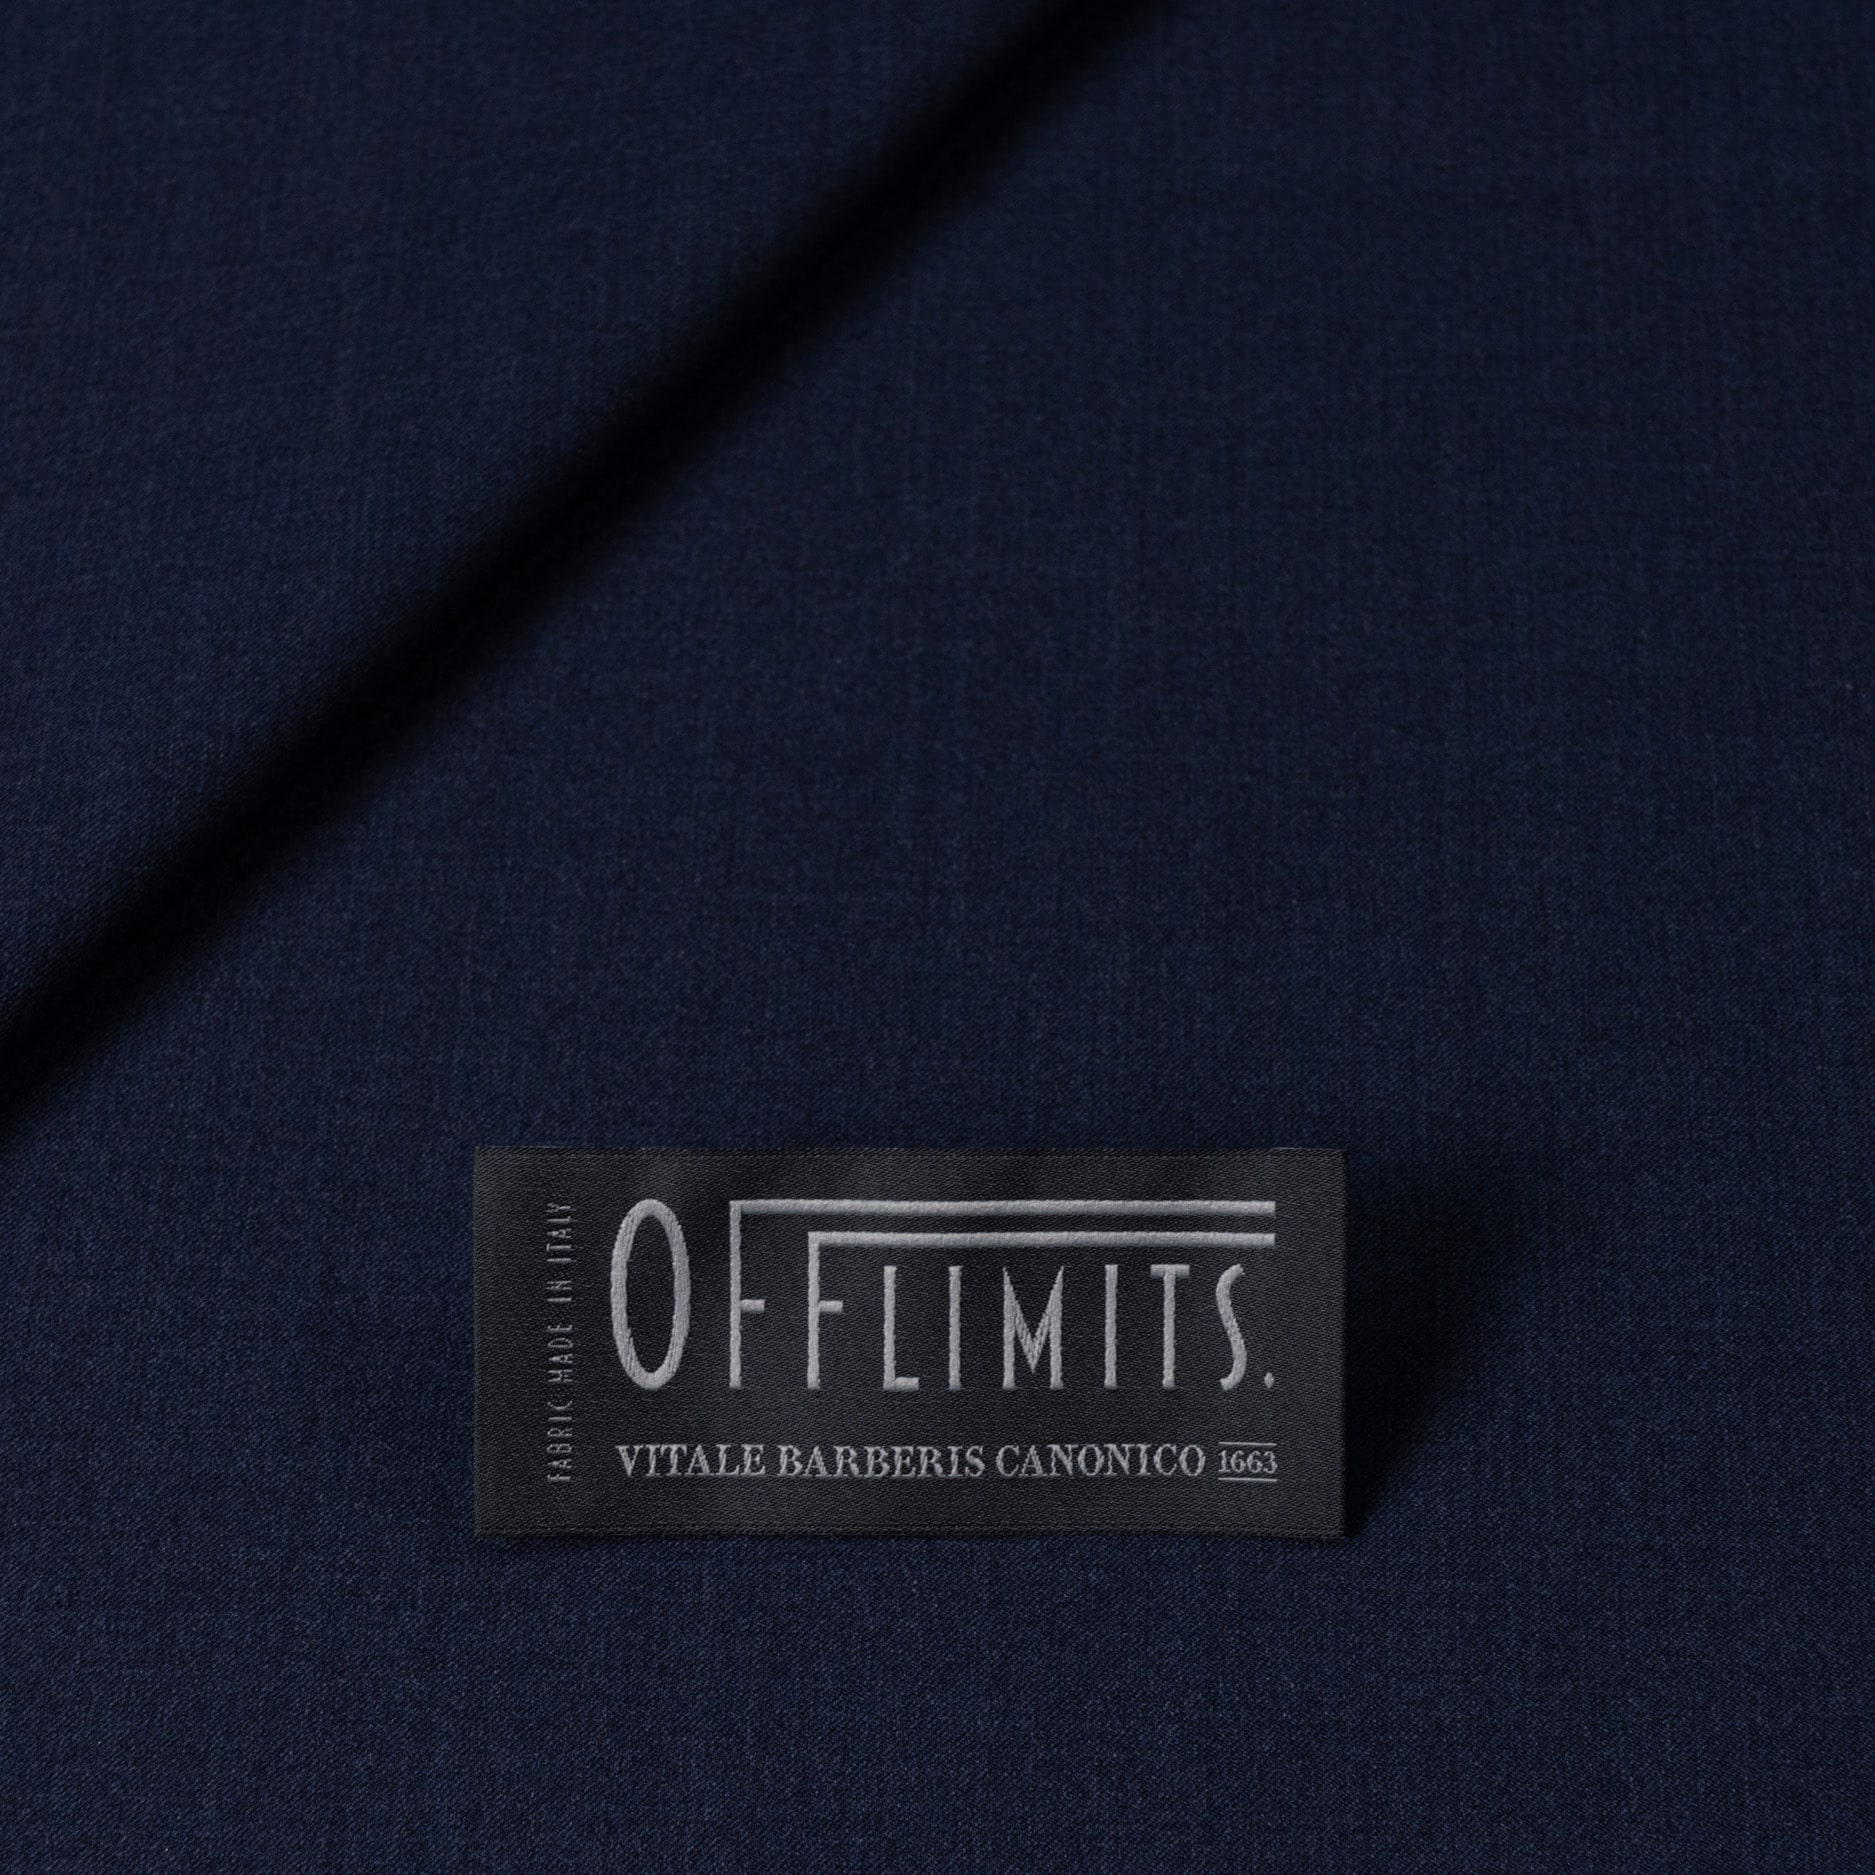 Plain blue with Vitale Barberis Canonico Offlimits label